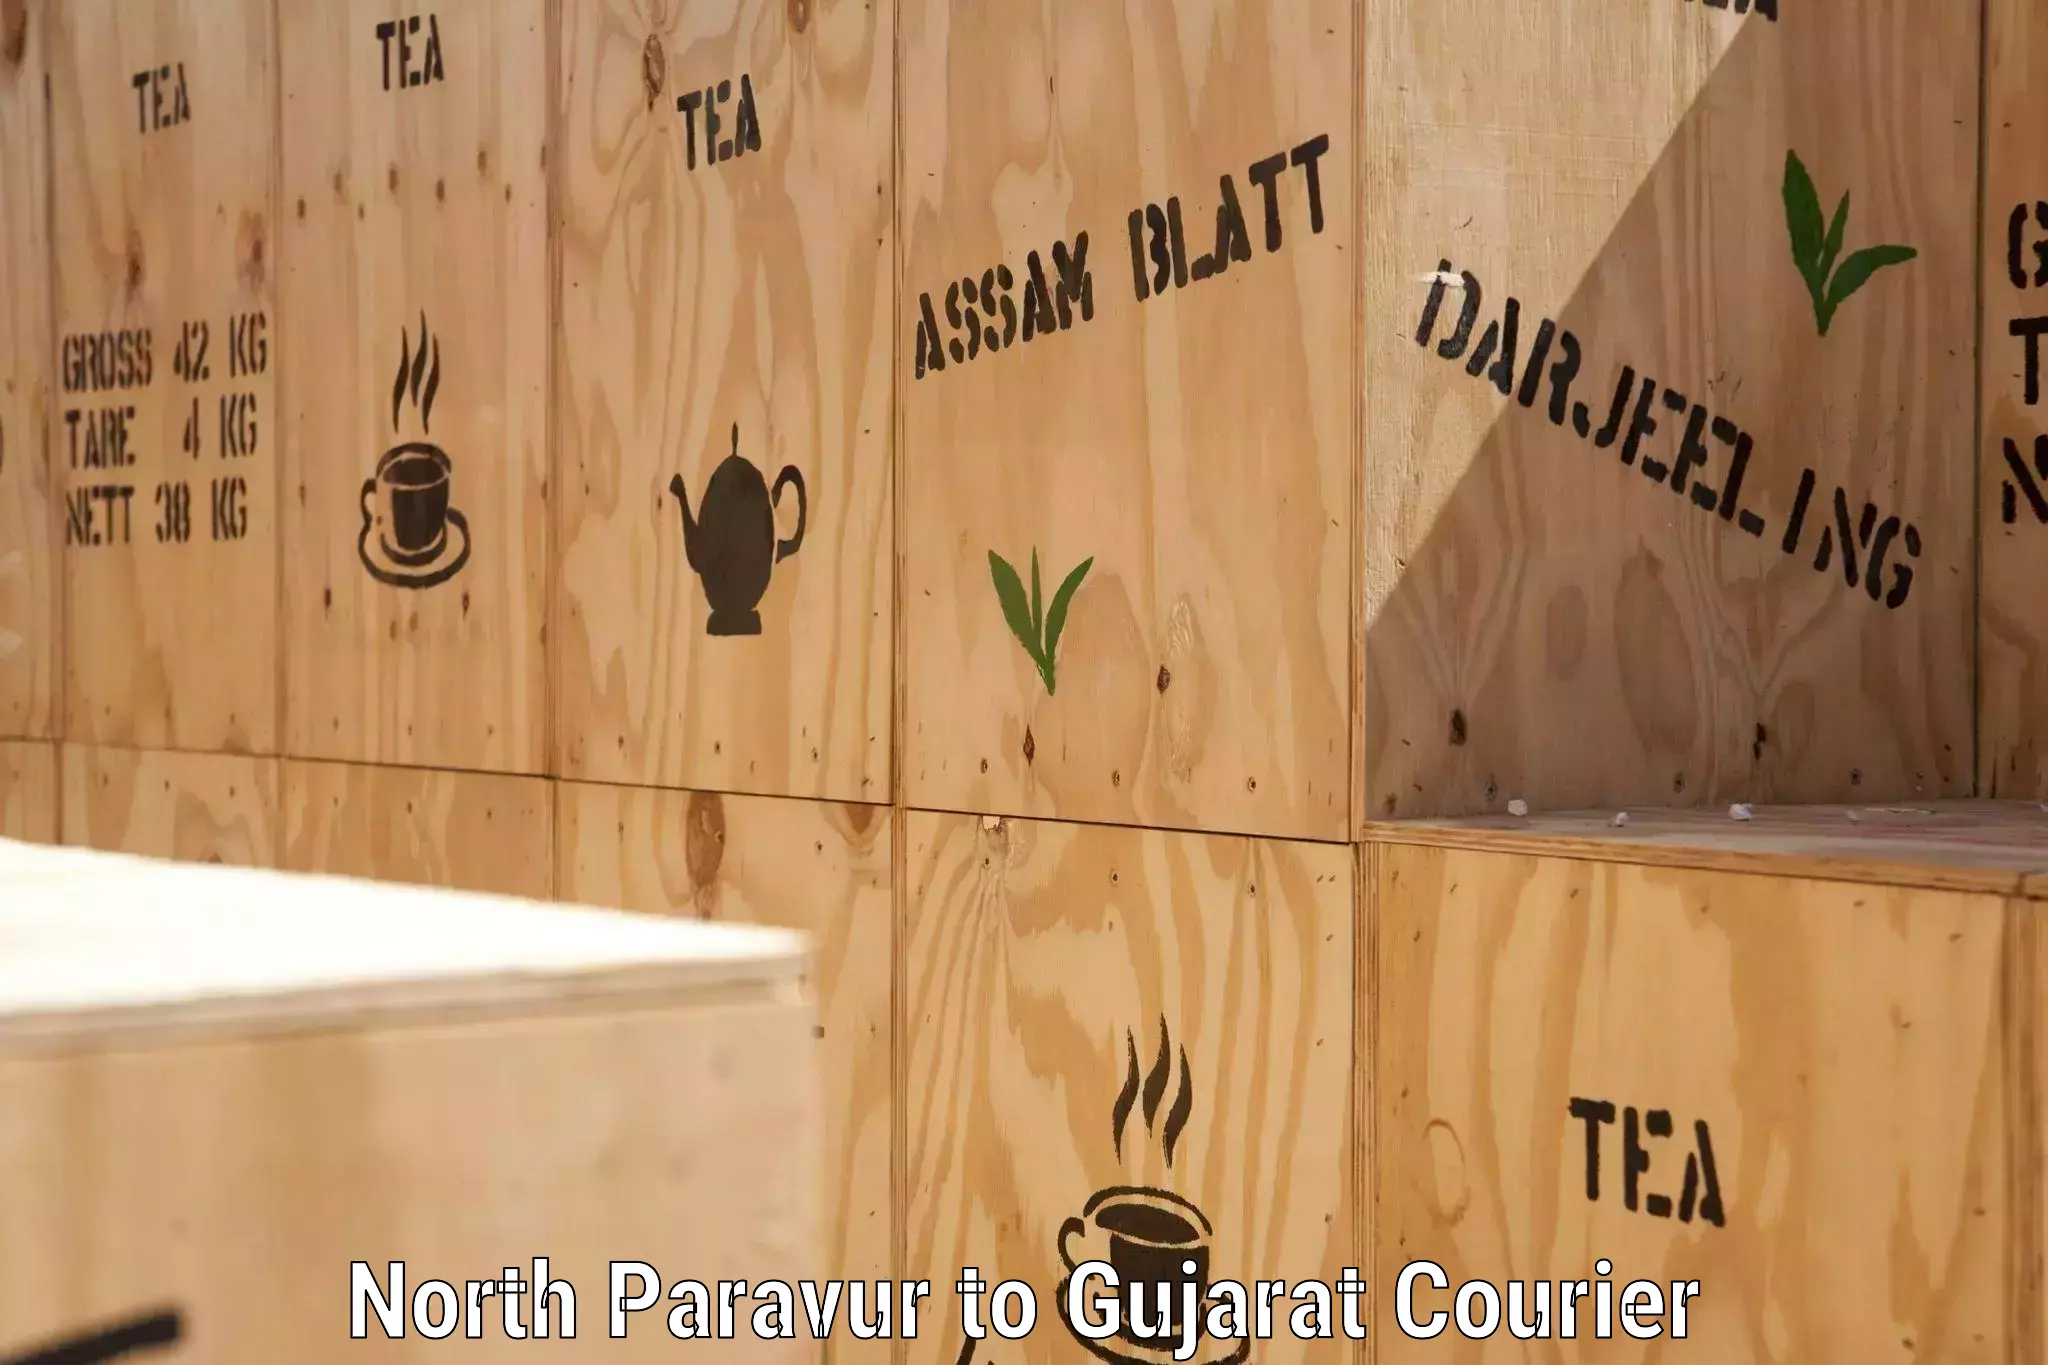 Courier service partnerships North Paravur to Porbandar